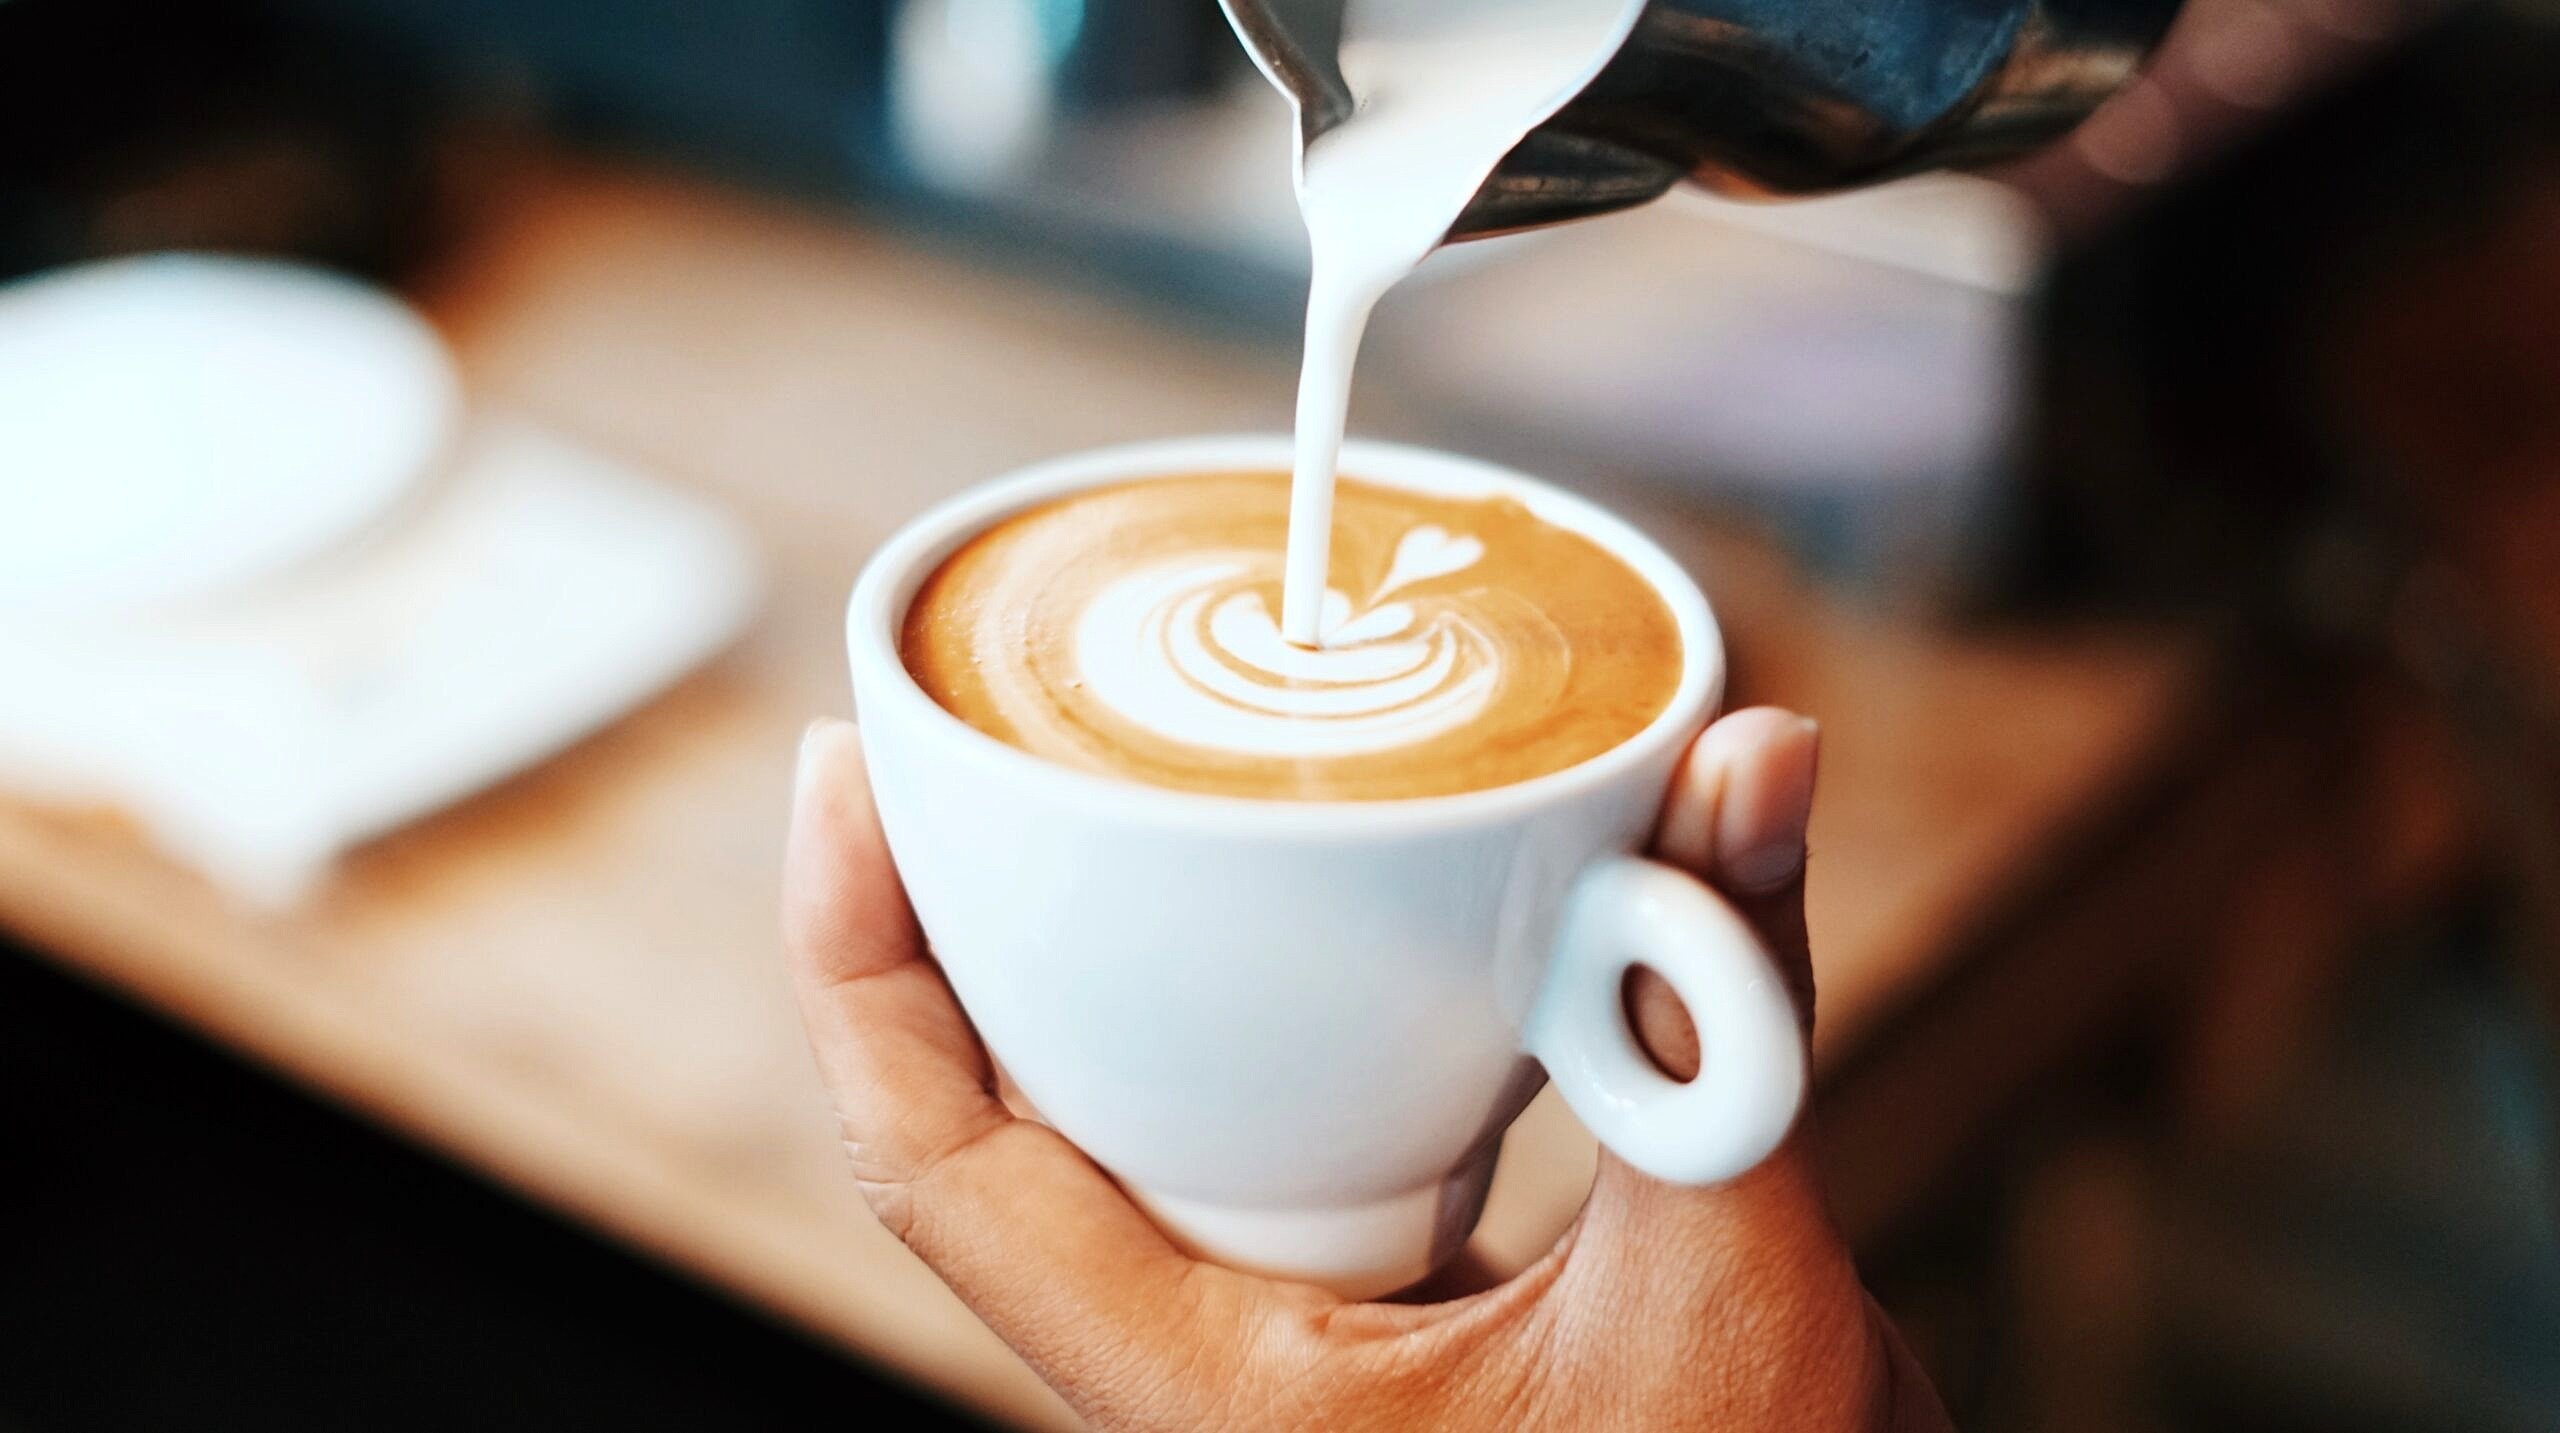 Hands pouring a design into a latte.